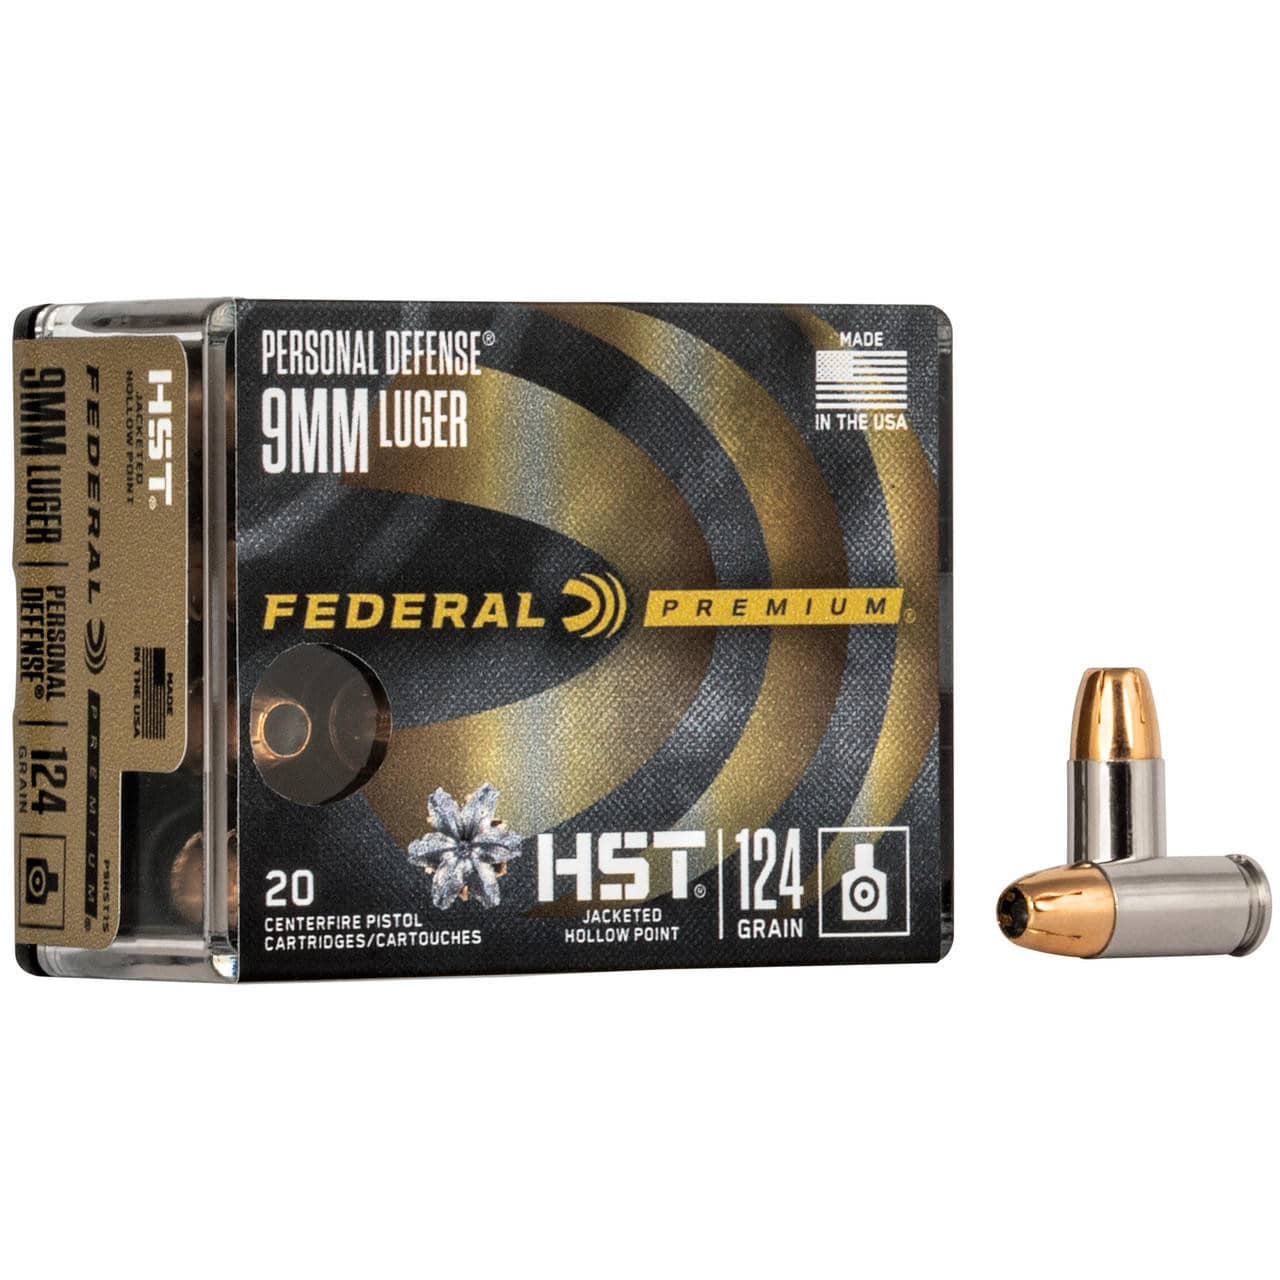 Federal Premium® Personal Defense® HST® Centerfire Pistol Cartridges